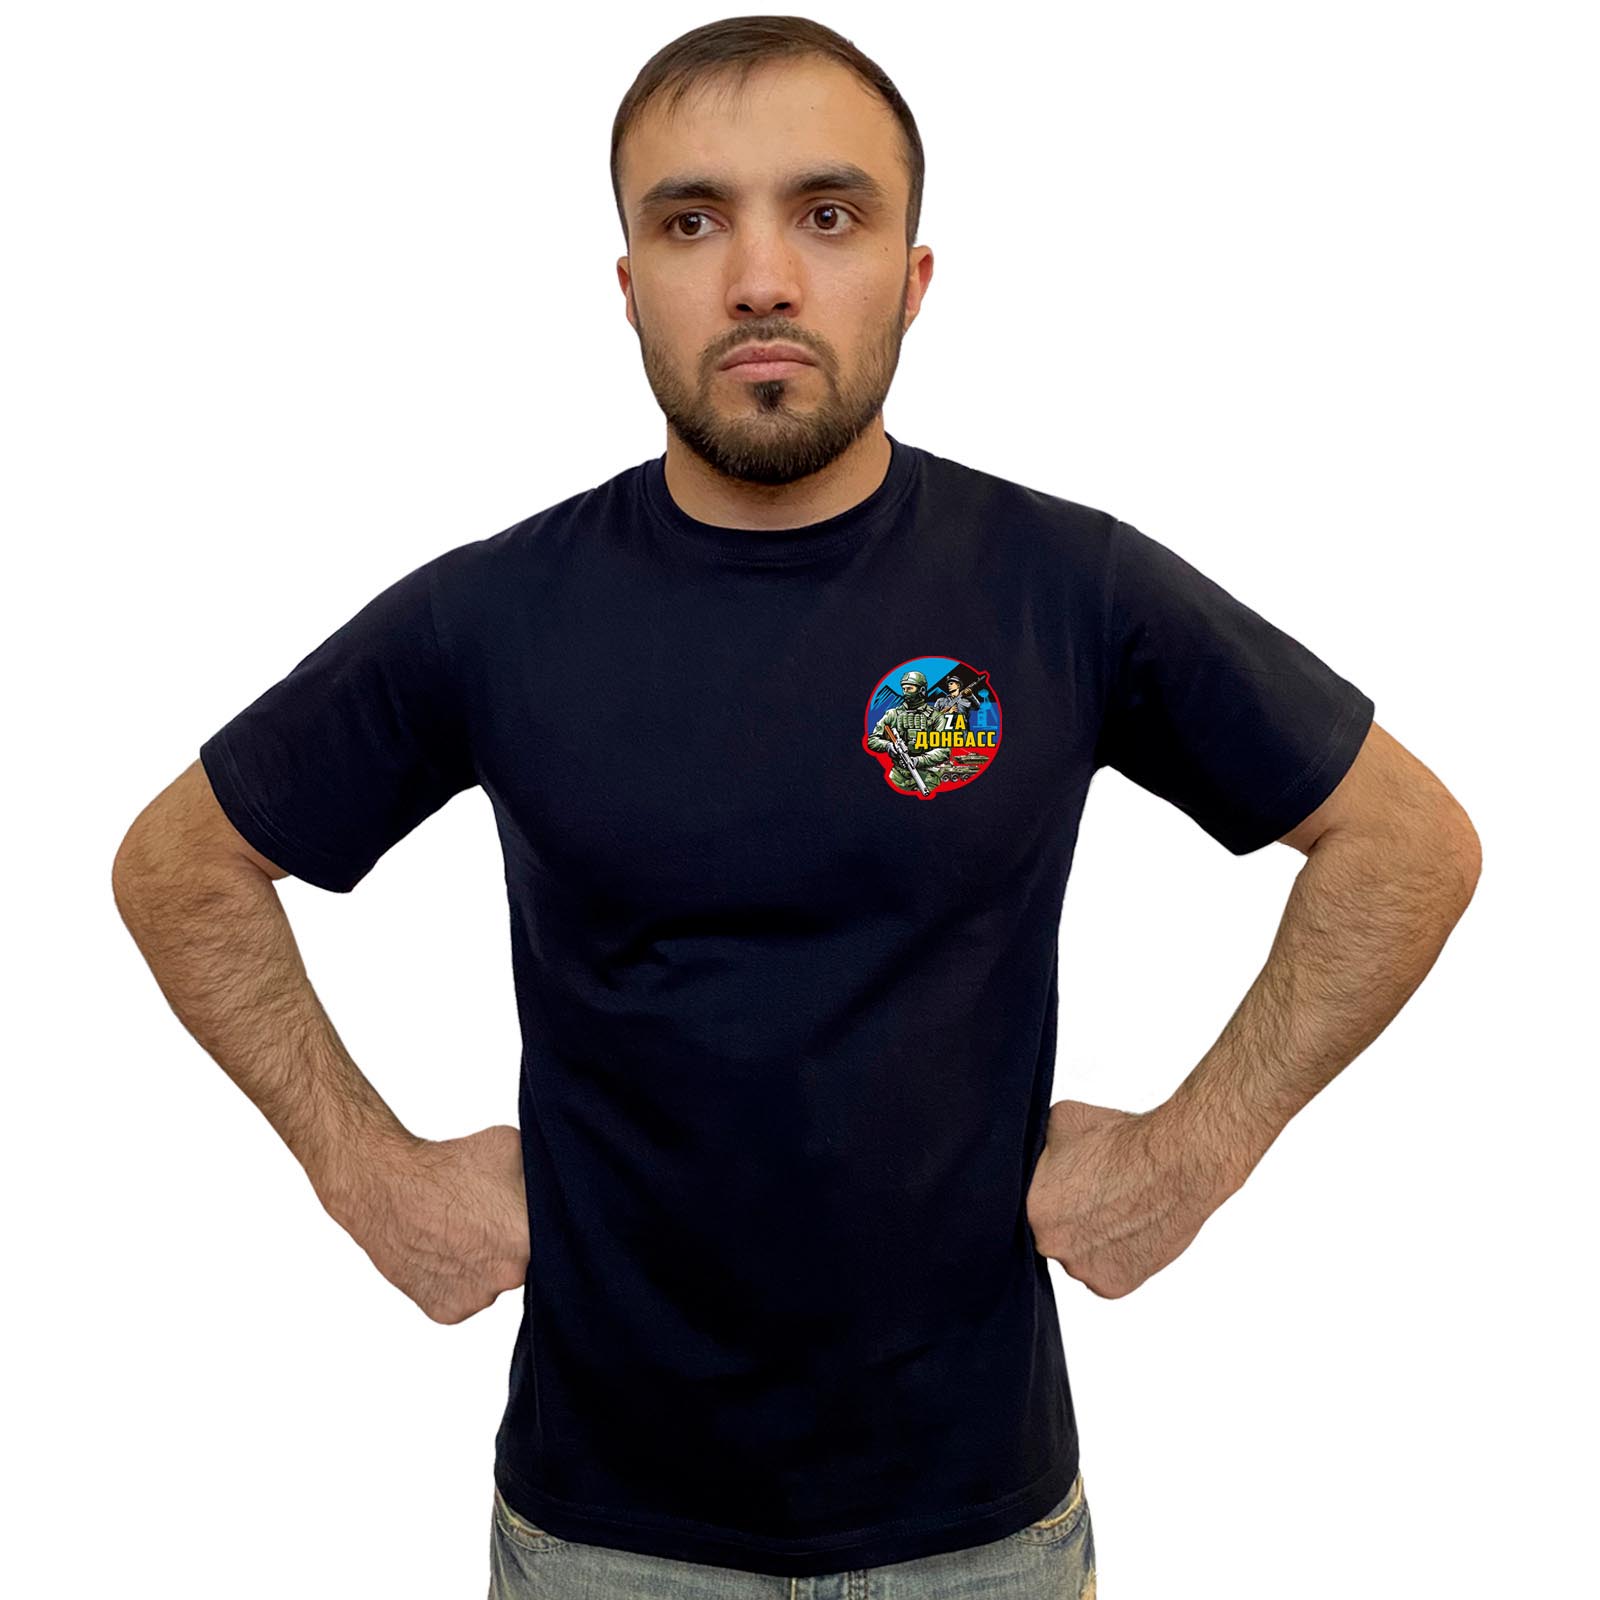 Тёмно-синяя футболка с термотрансфером "Zа Донбасс"